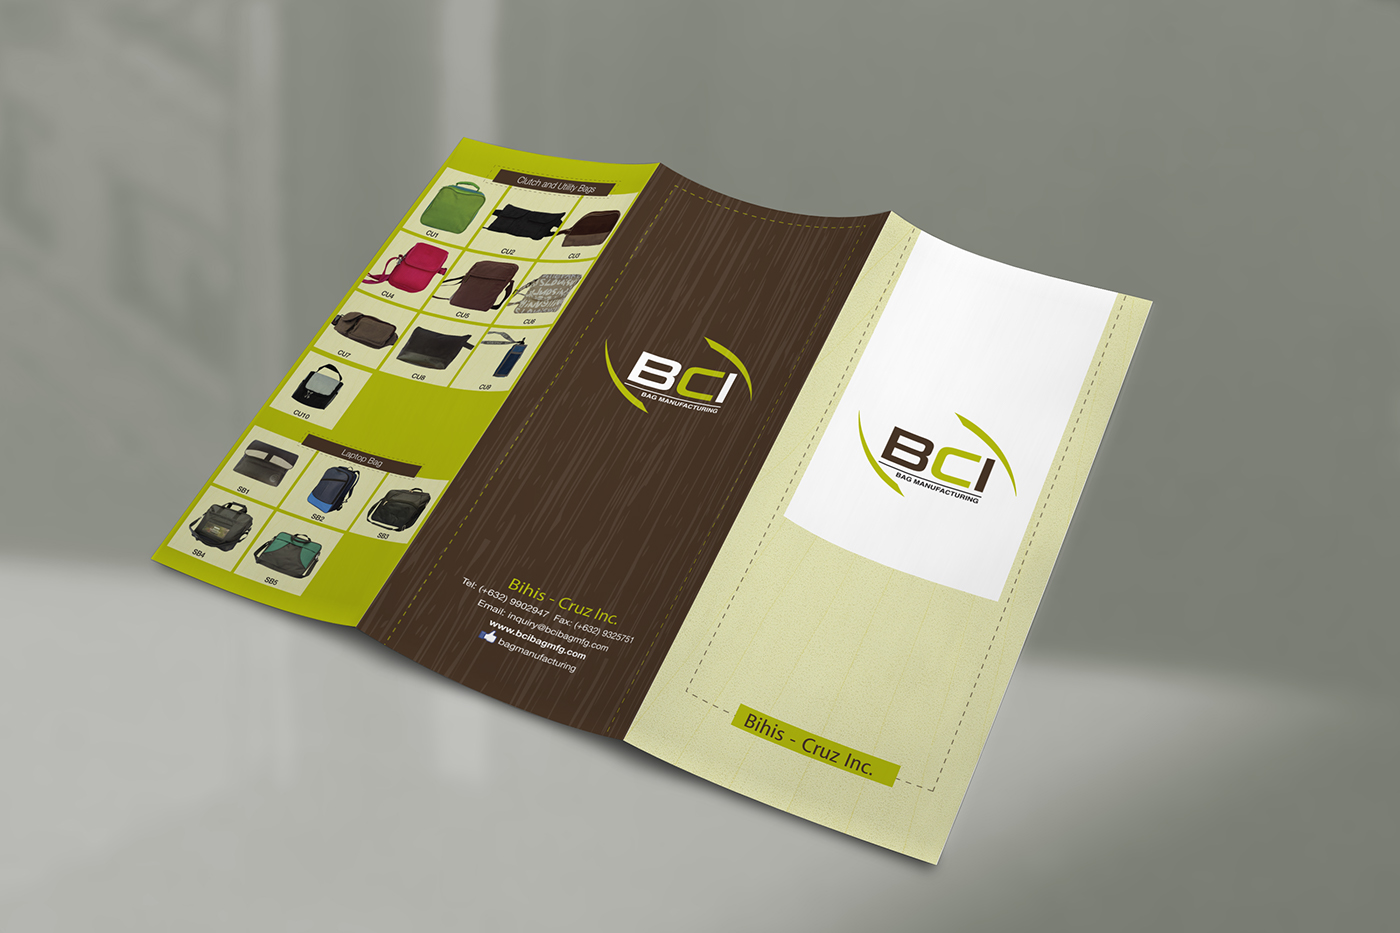 bags bci bci bags brochure catalog Catalogue flyers logo Logo Design print materials